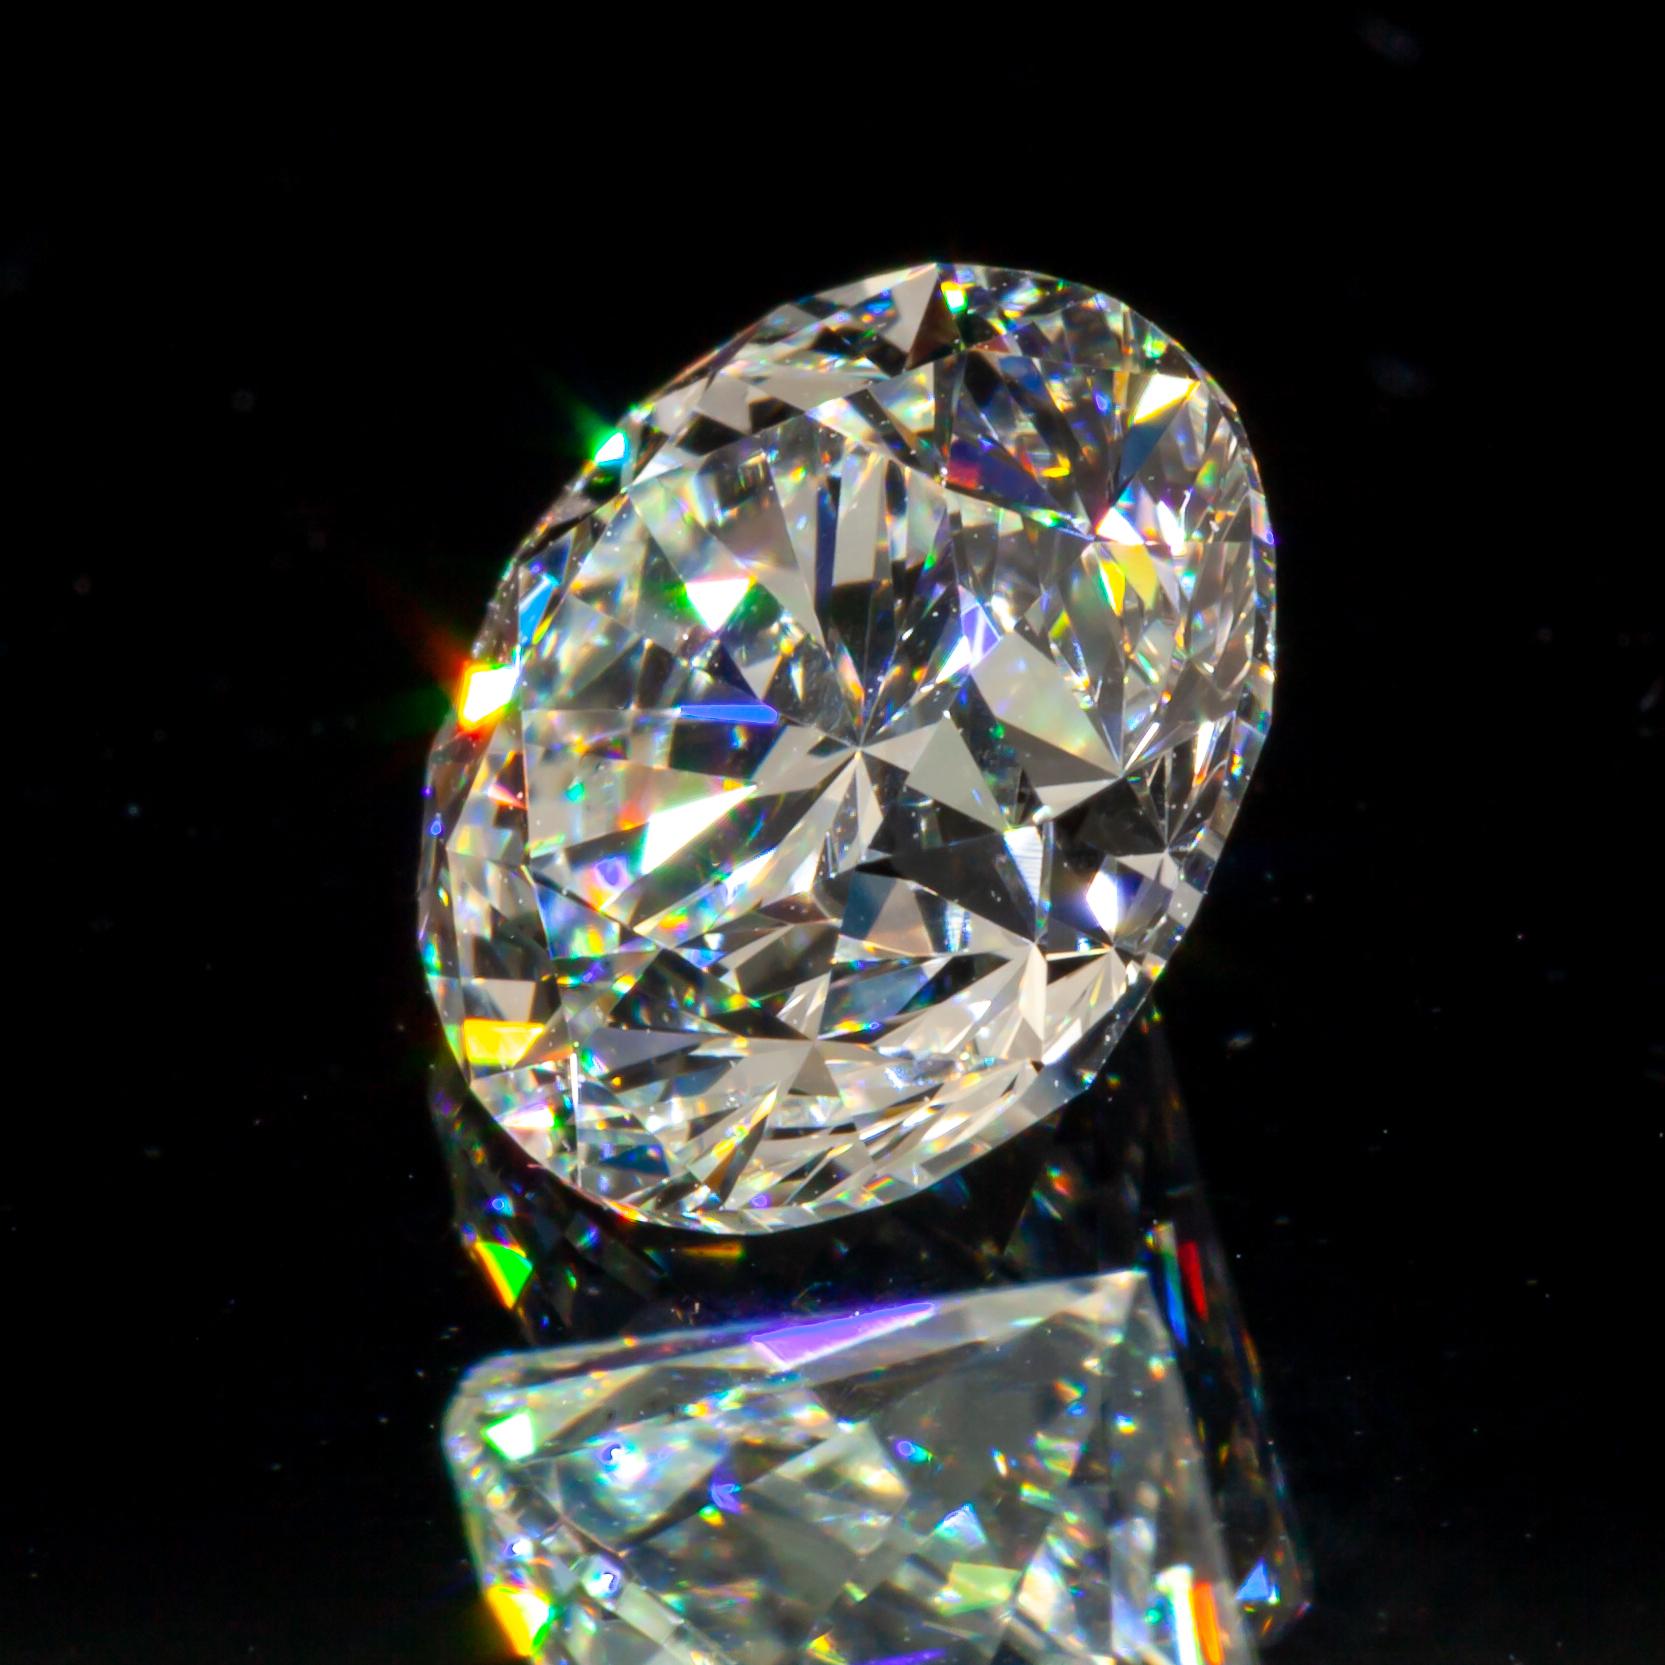 Diamond General Info
Diamond Cut: Round brilliant
Measurements:7.10  x  7.22  -  4.70 mm

Diamond Grading Results
Carat Weight:1.52
Color Grade: H
Clarity Grade: VS2

Additional Grading Information 
Polish:  Good
Symmetry: